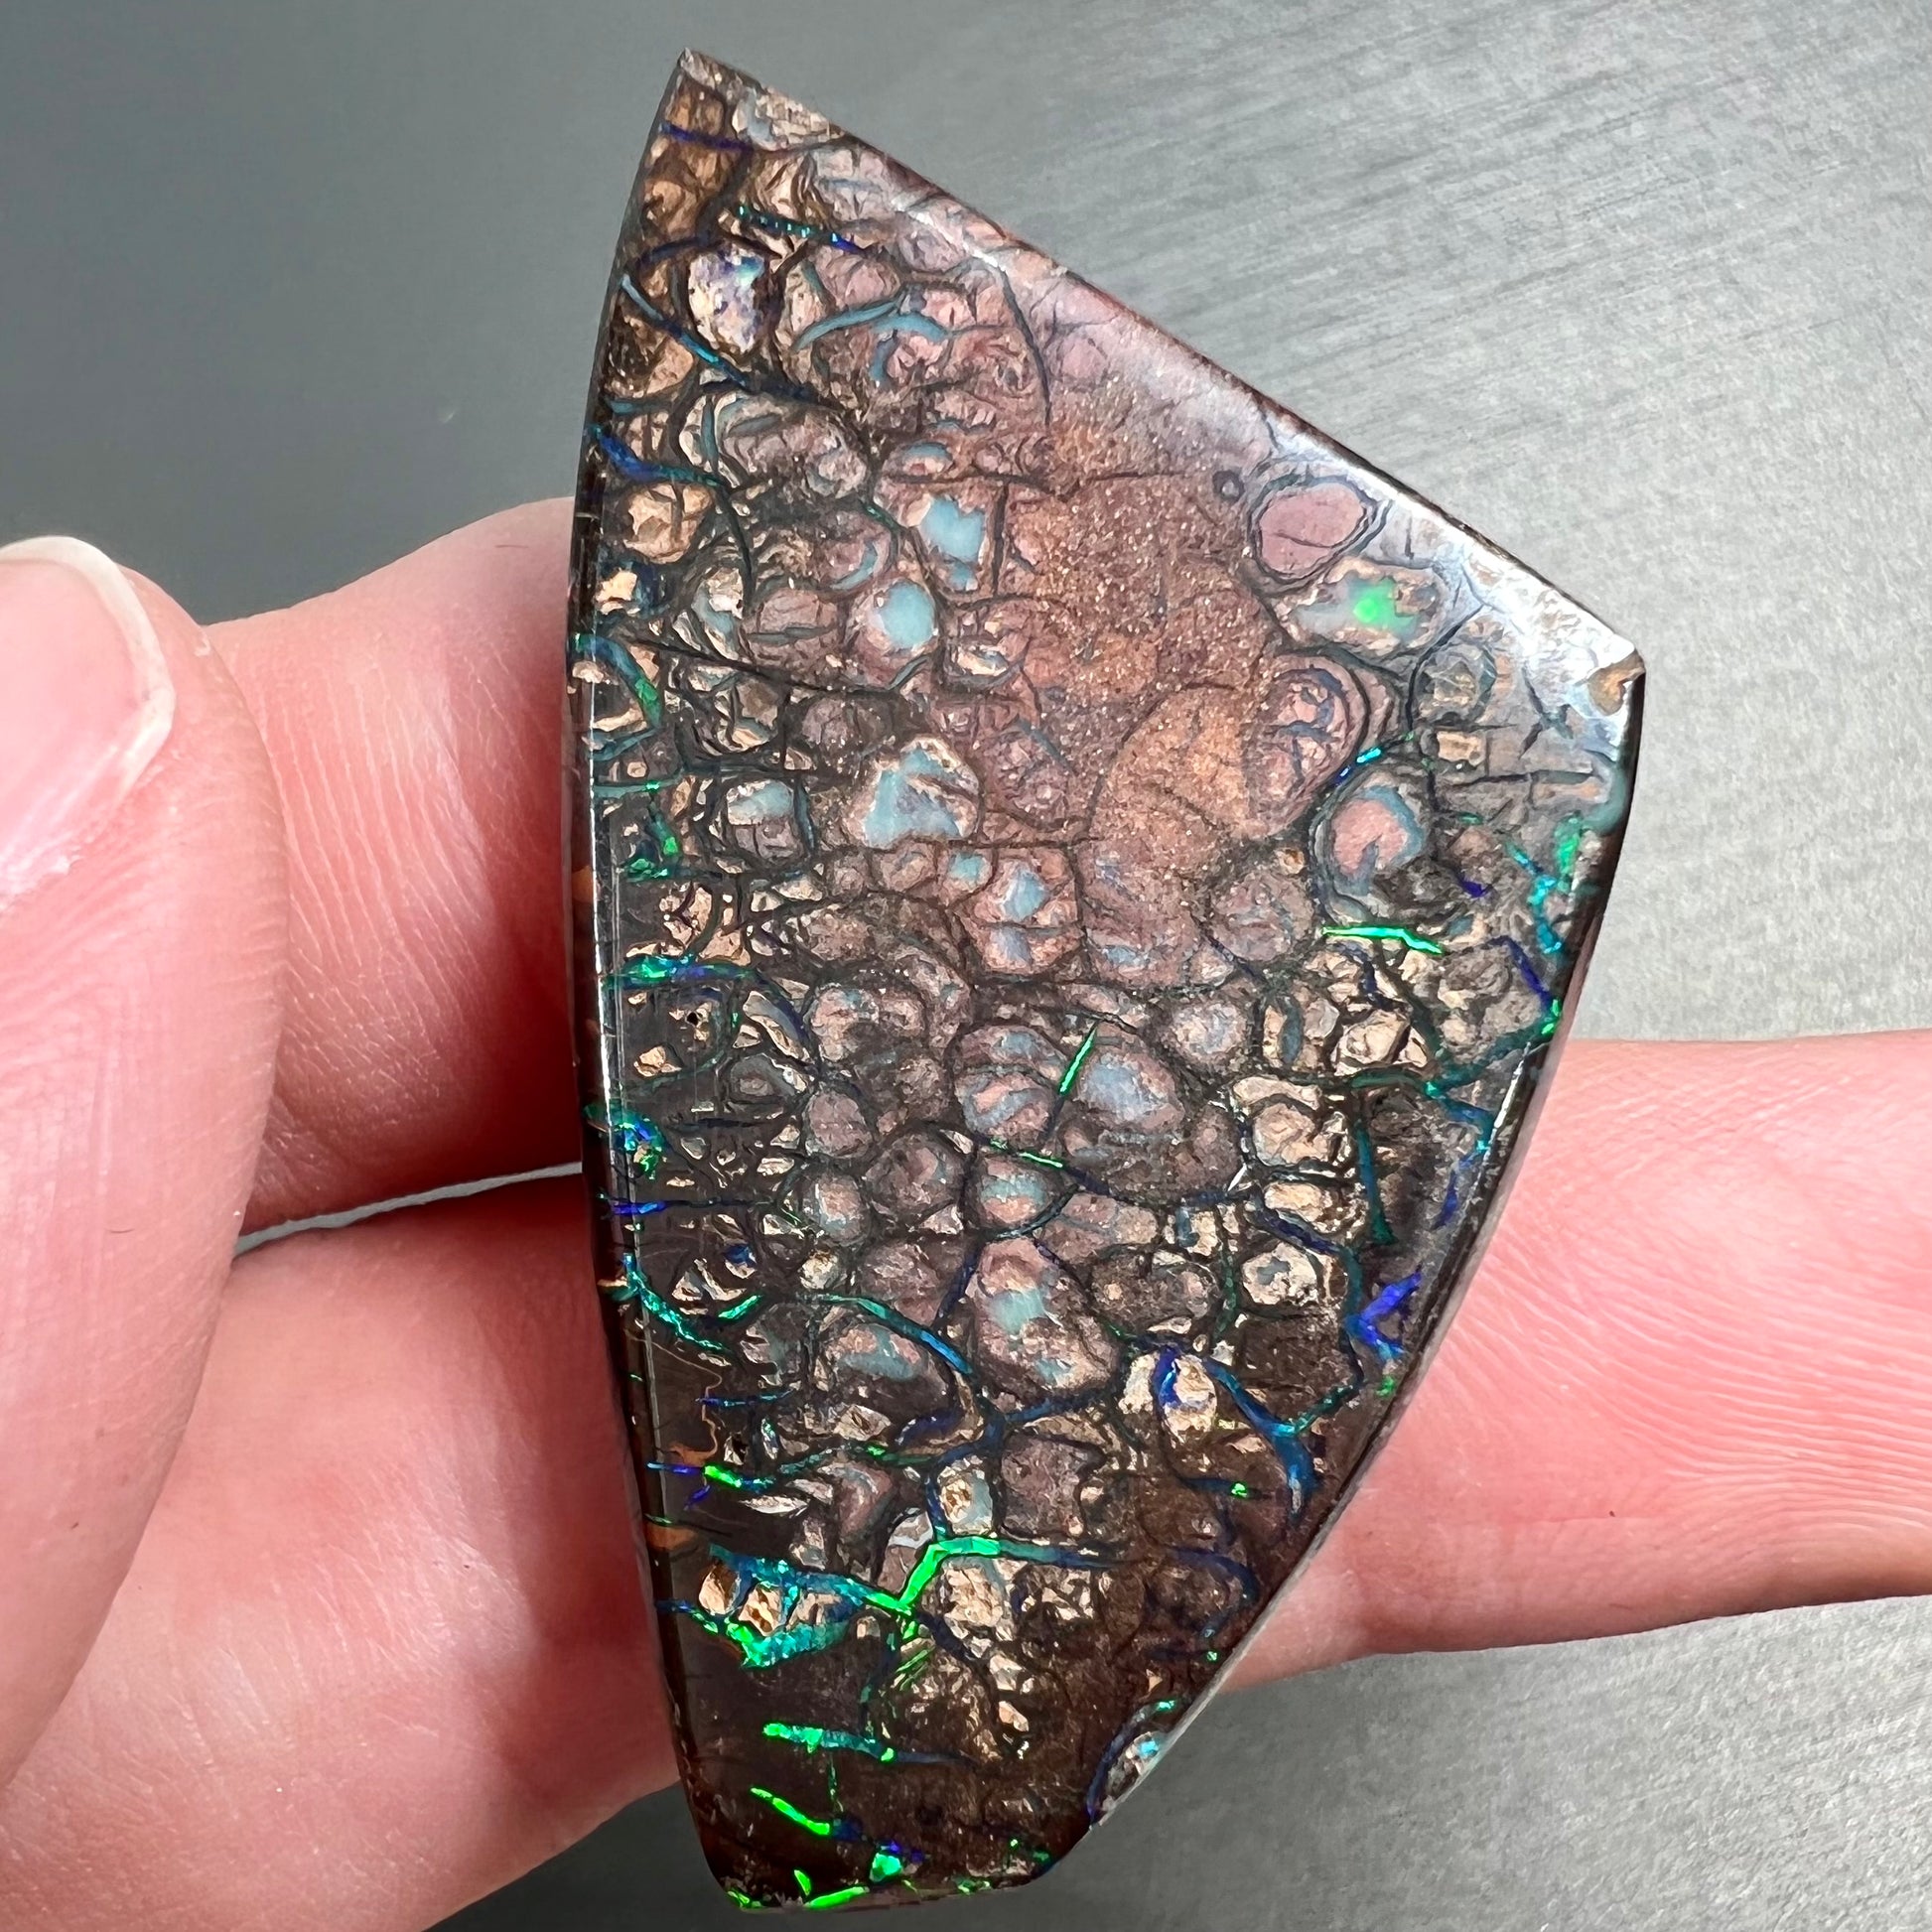 A loose, freeform cut polished Koroit boulder opal stone from Koroit Mining District, Australia.